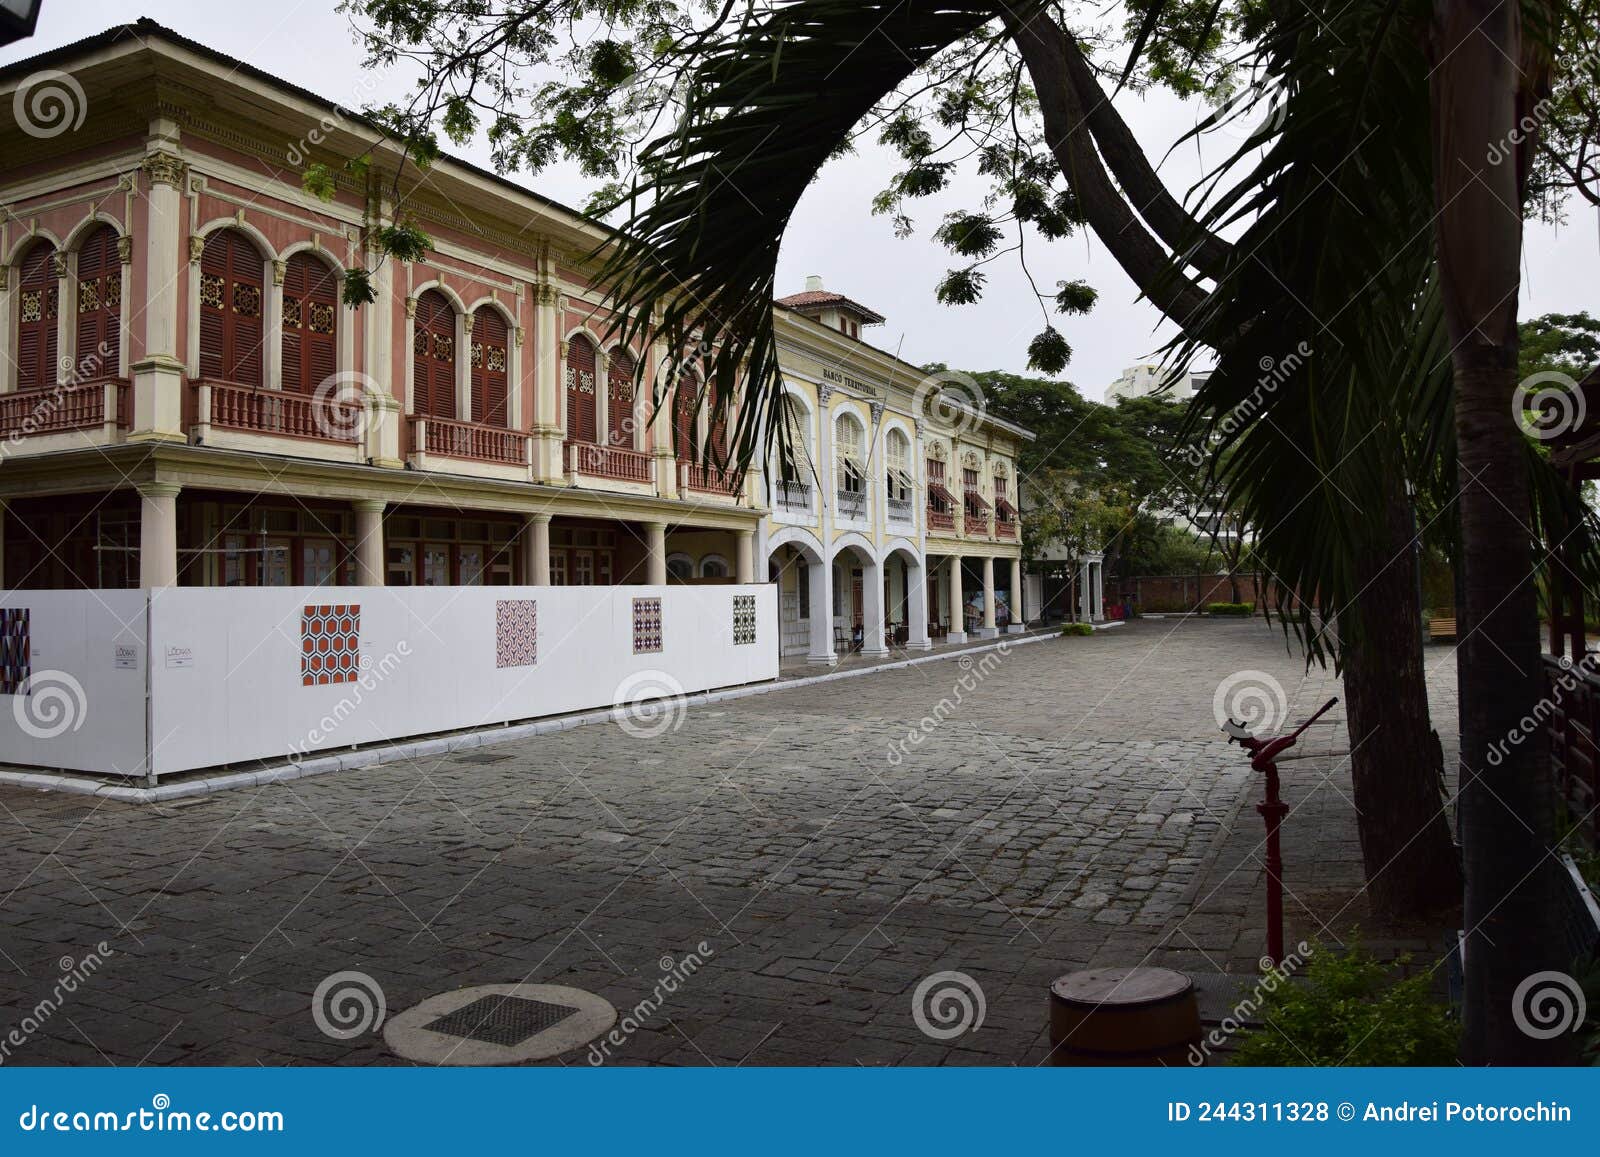 19th century reconstruction buildings elegant houses at guayaquil parque historico, ecuador